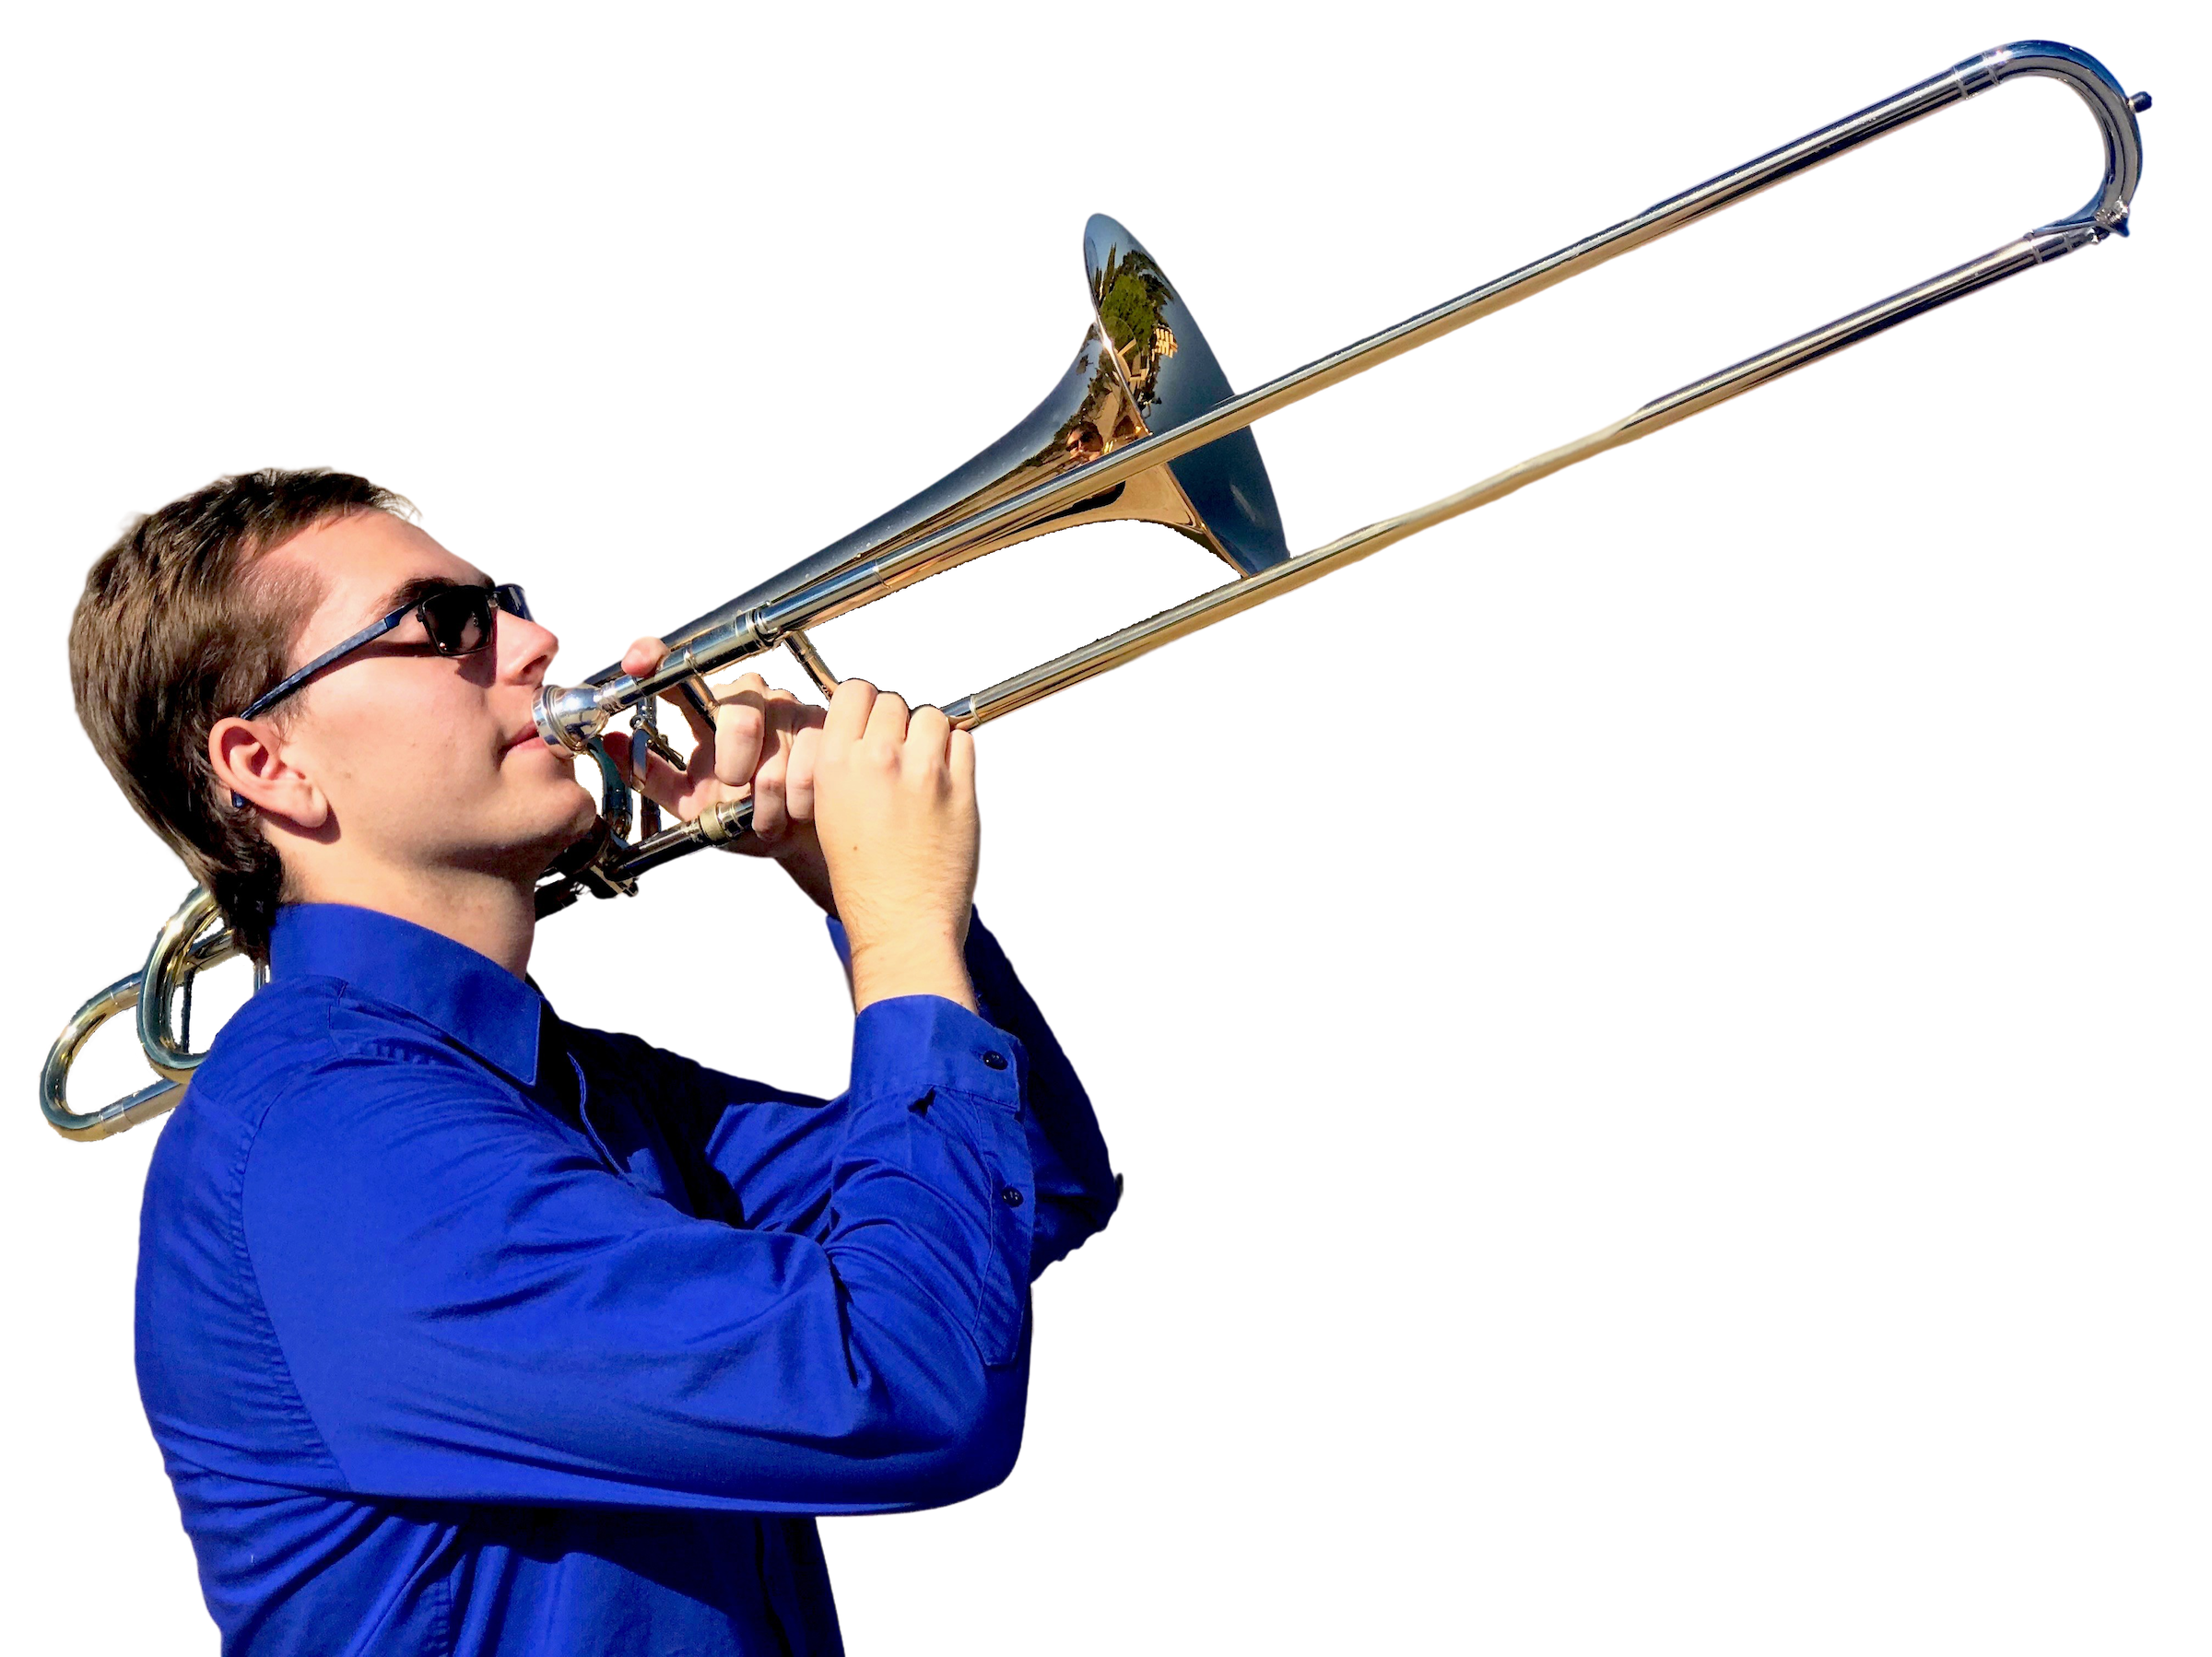 Nick playing the trombone